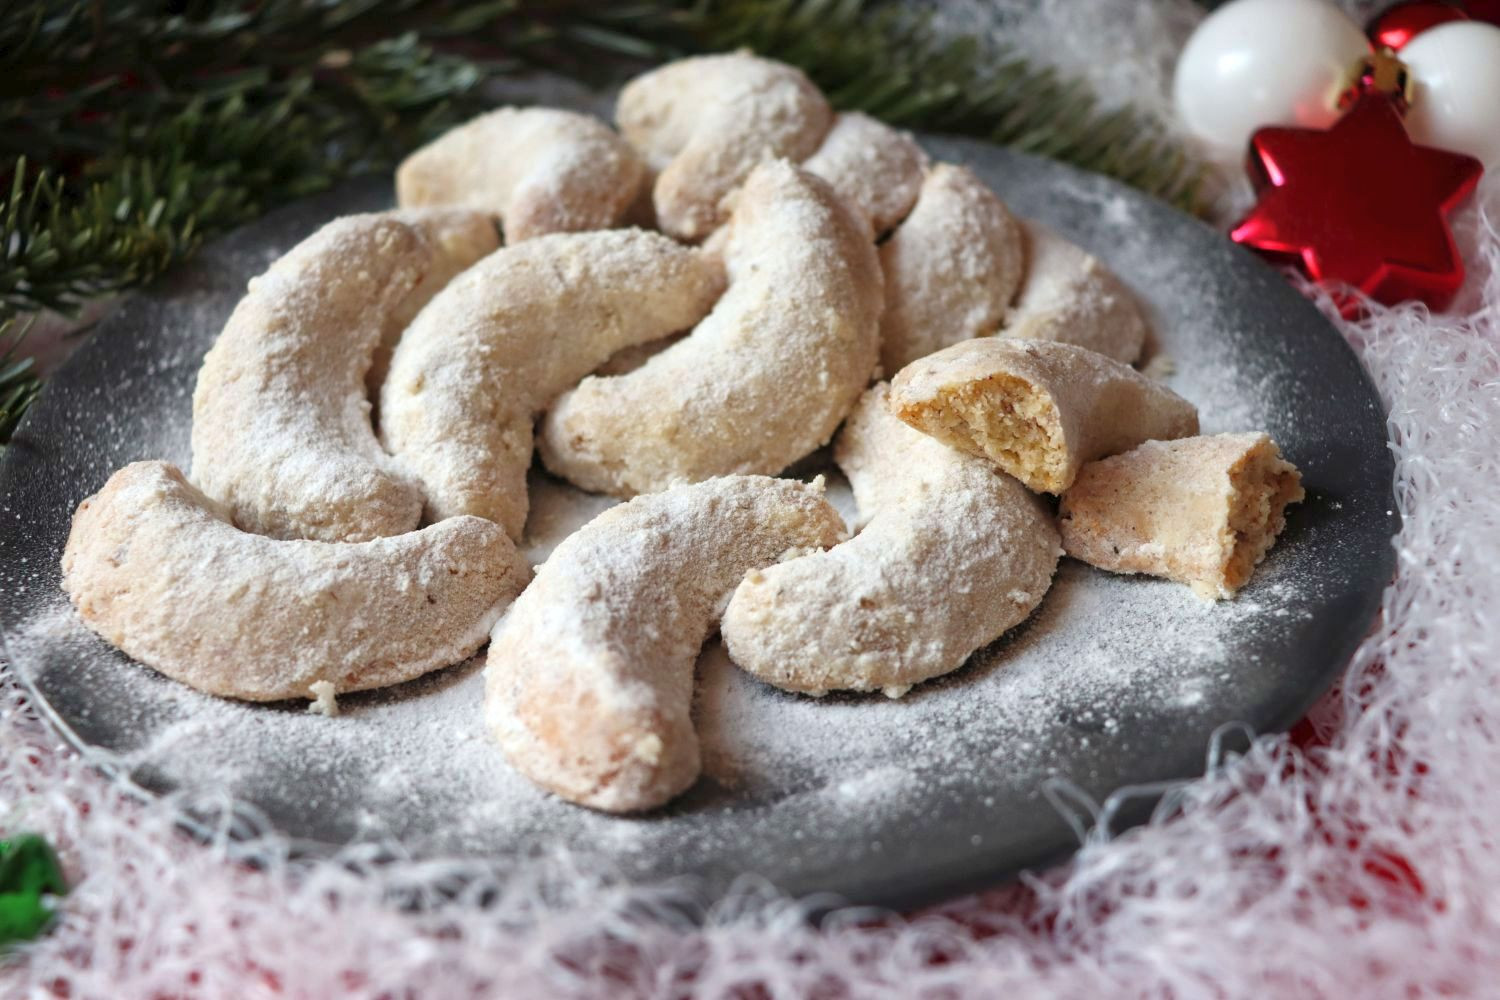 Vanillekipferl - German Vanilla Crescent Cookies which melt in your mouth